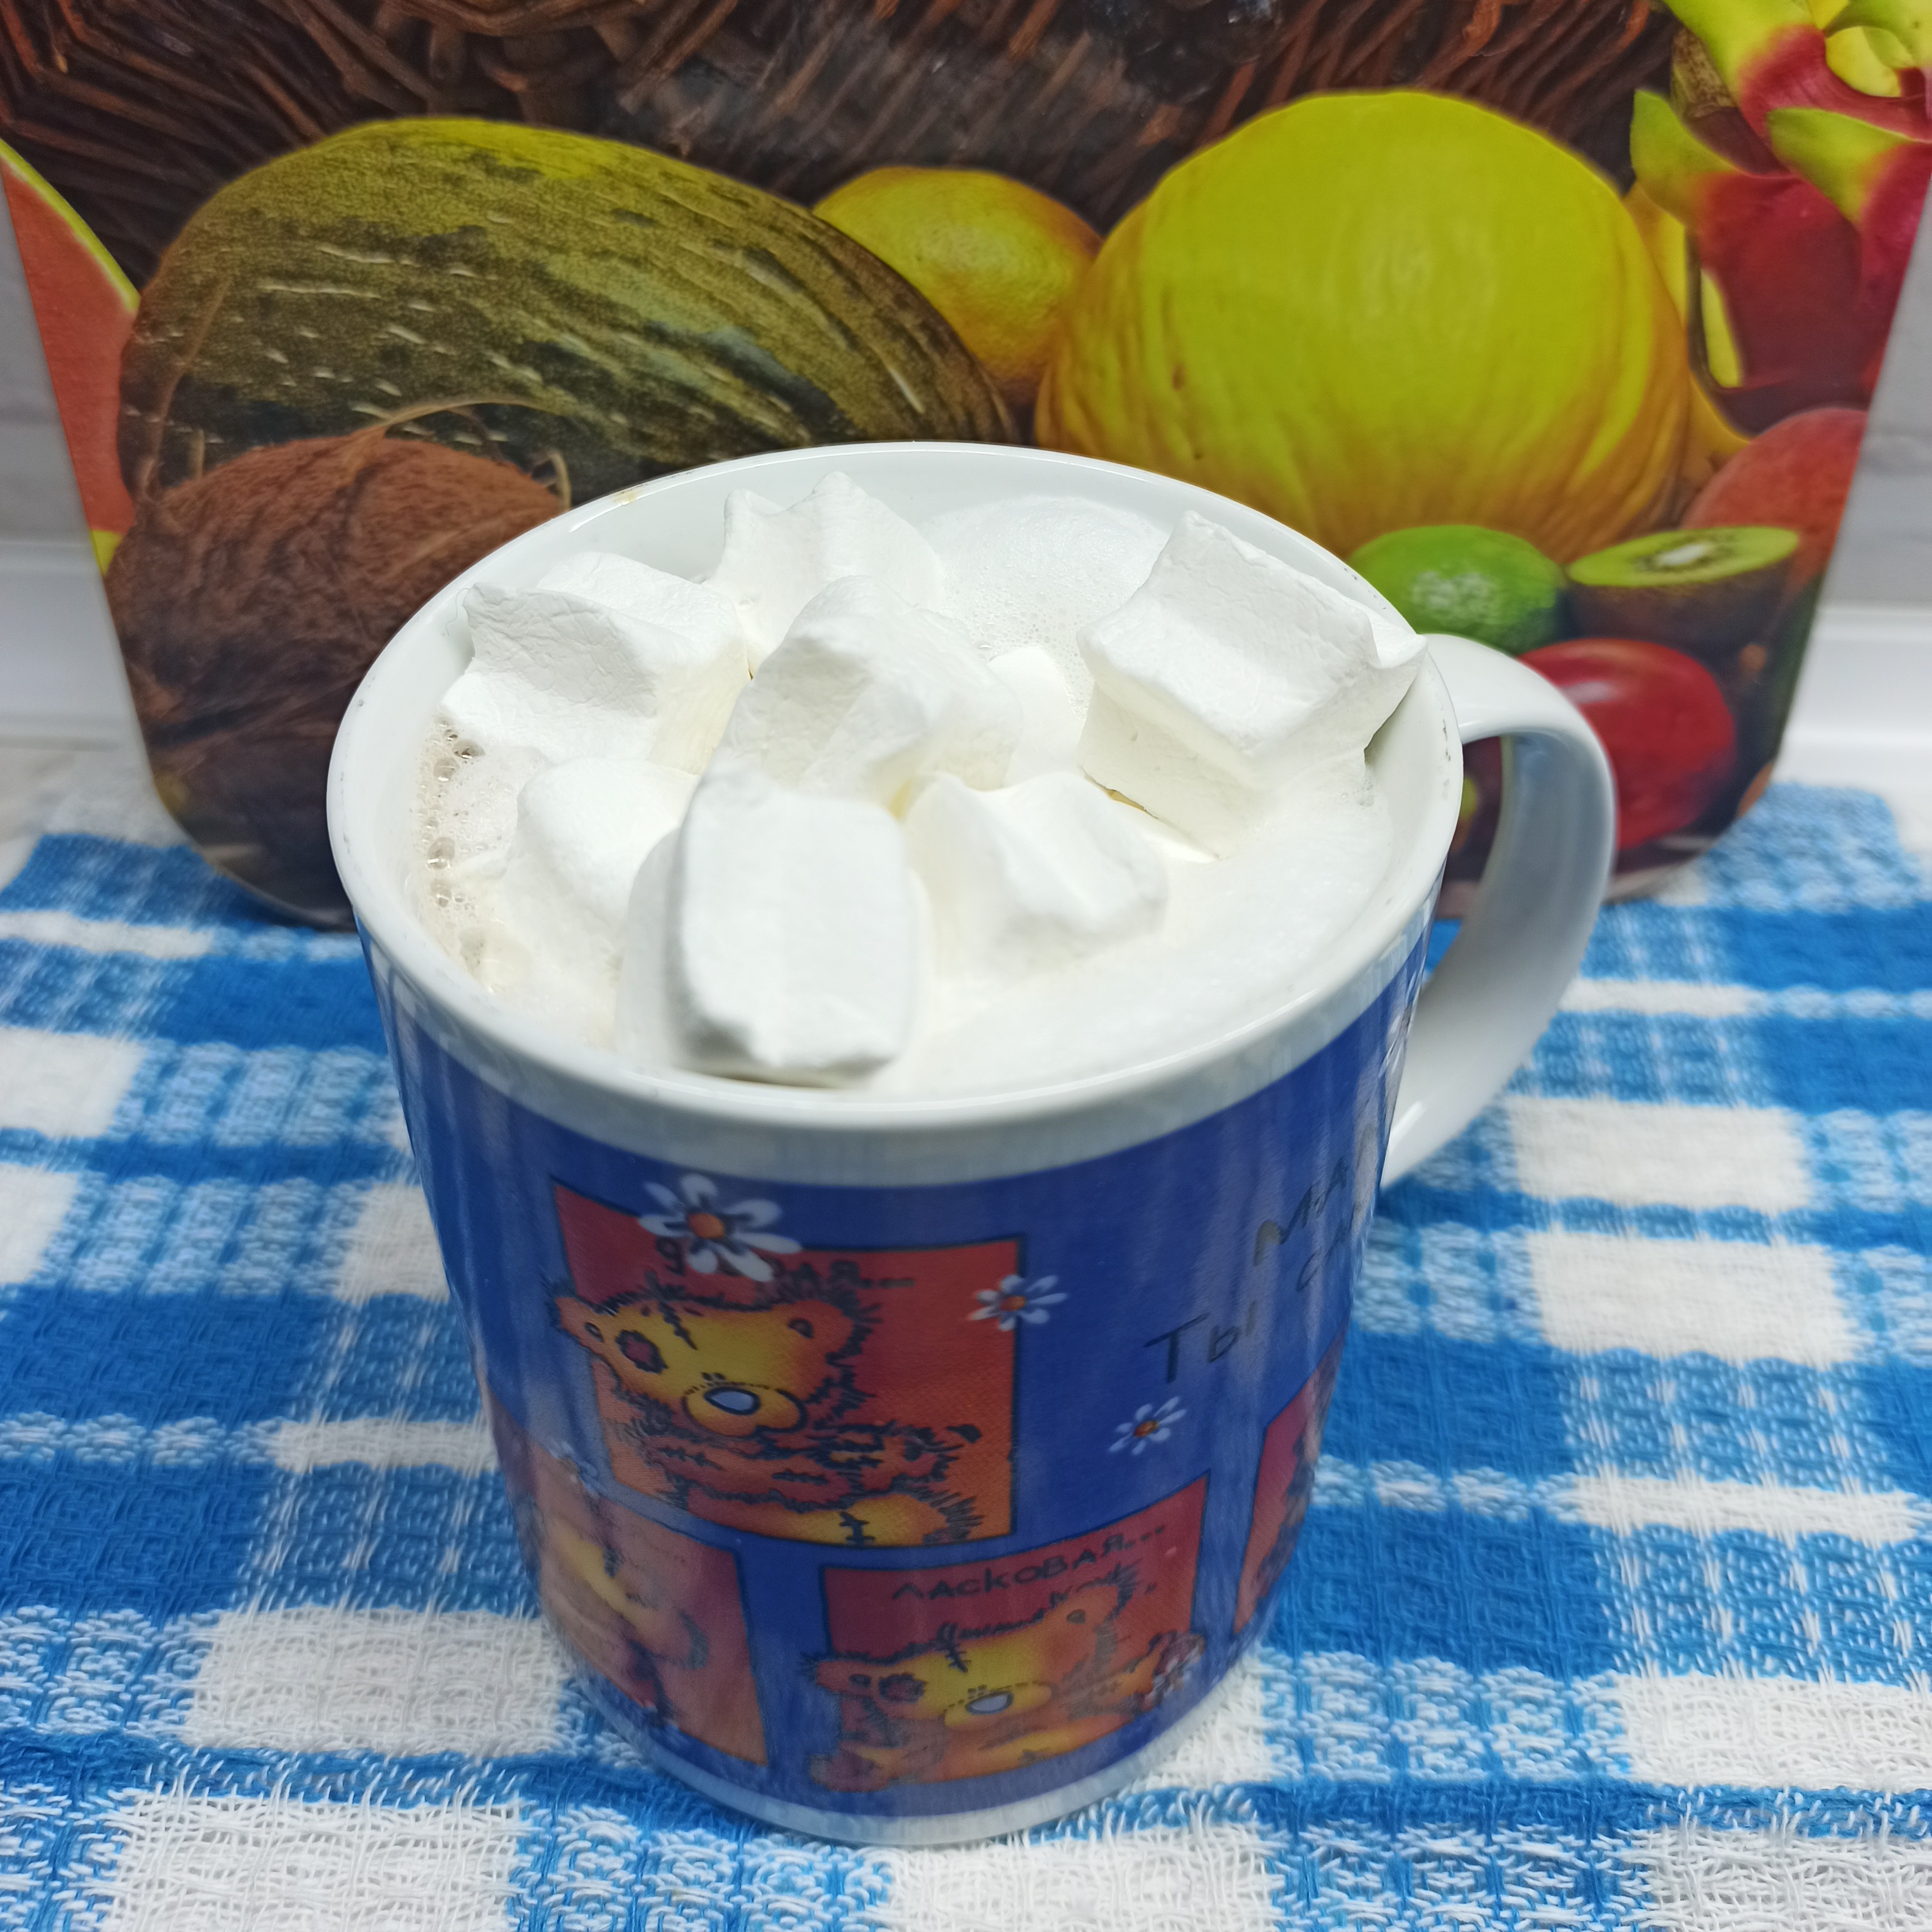 Осенний горячий напиток - какао с маршмеллоу